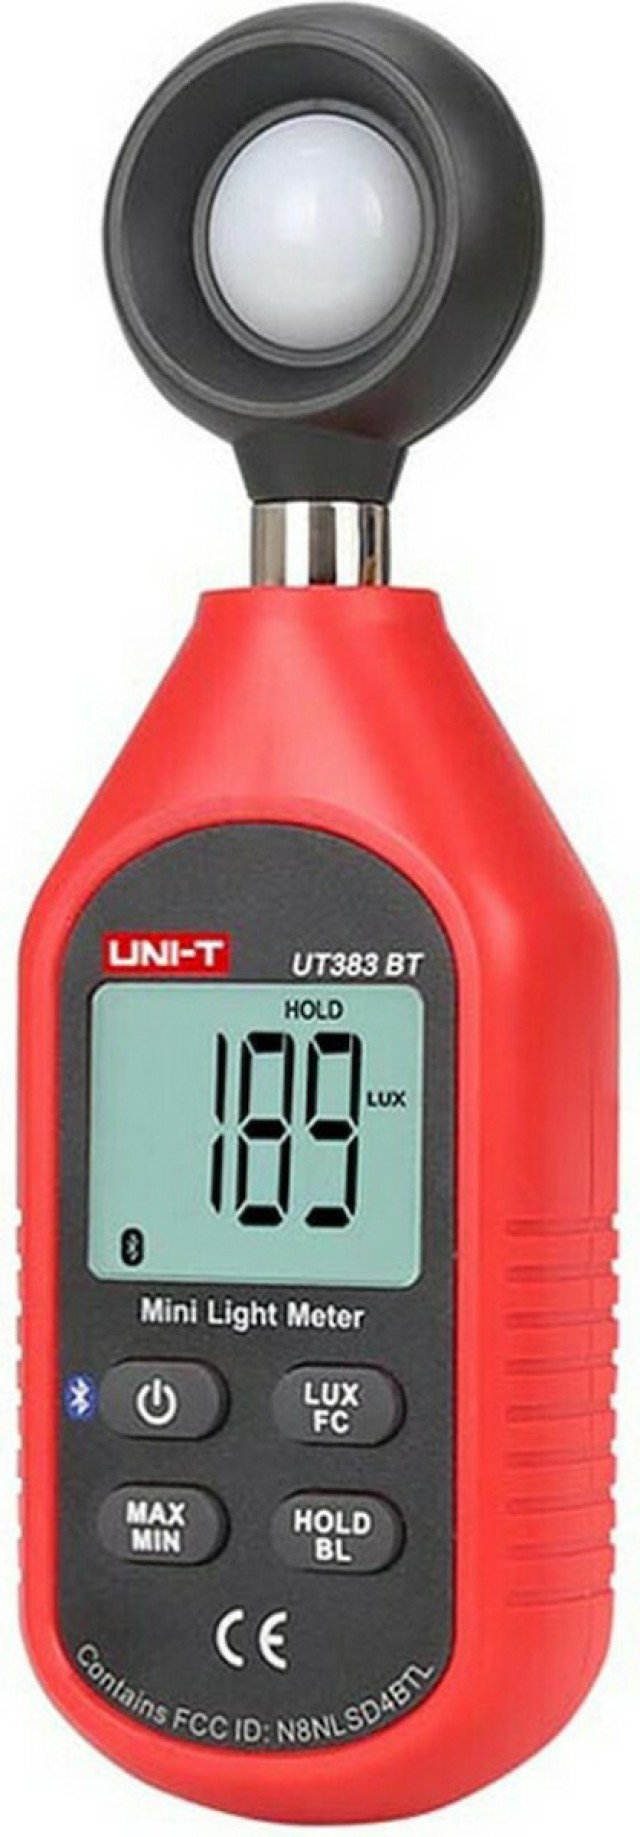 Medidor de luz UNI-T LUX UT383 BT, Bluetooth